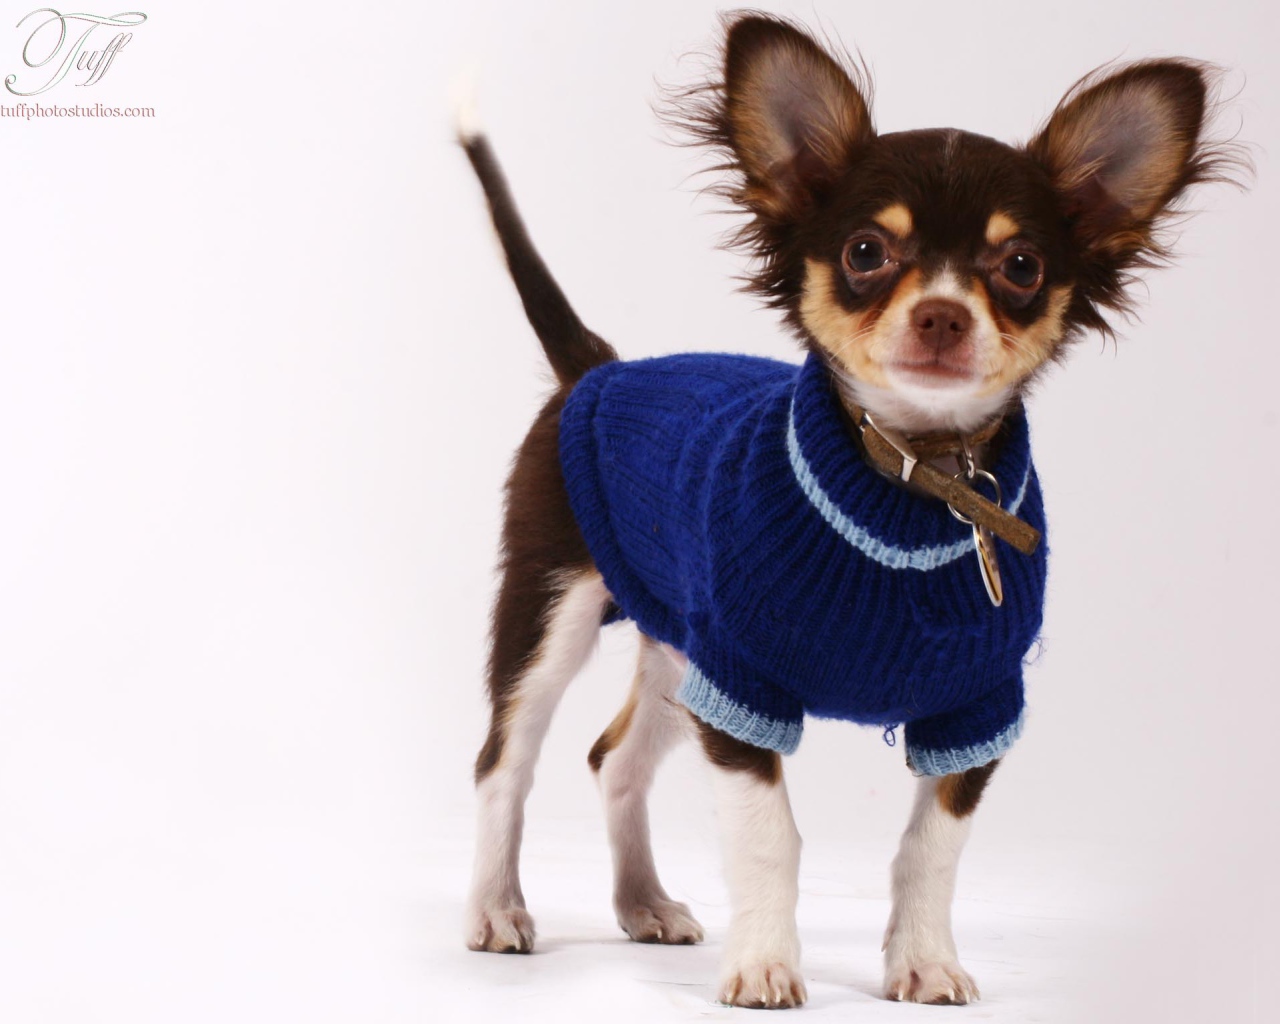 Chihuahua in a blue sweater